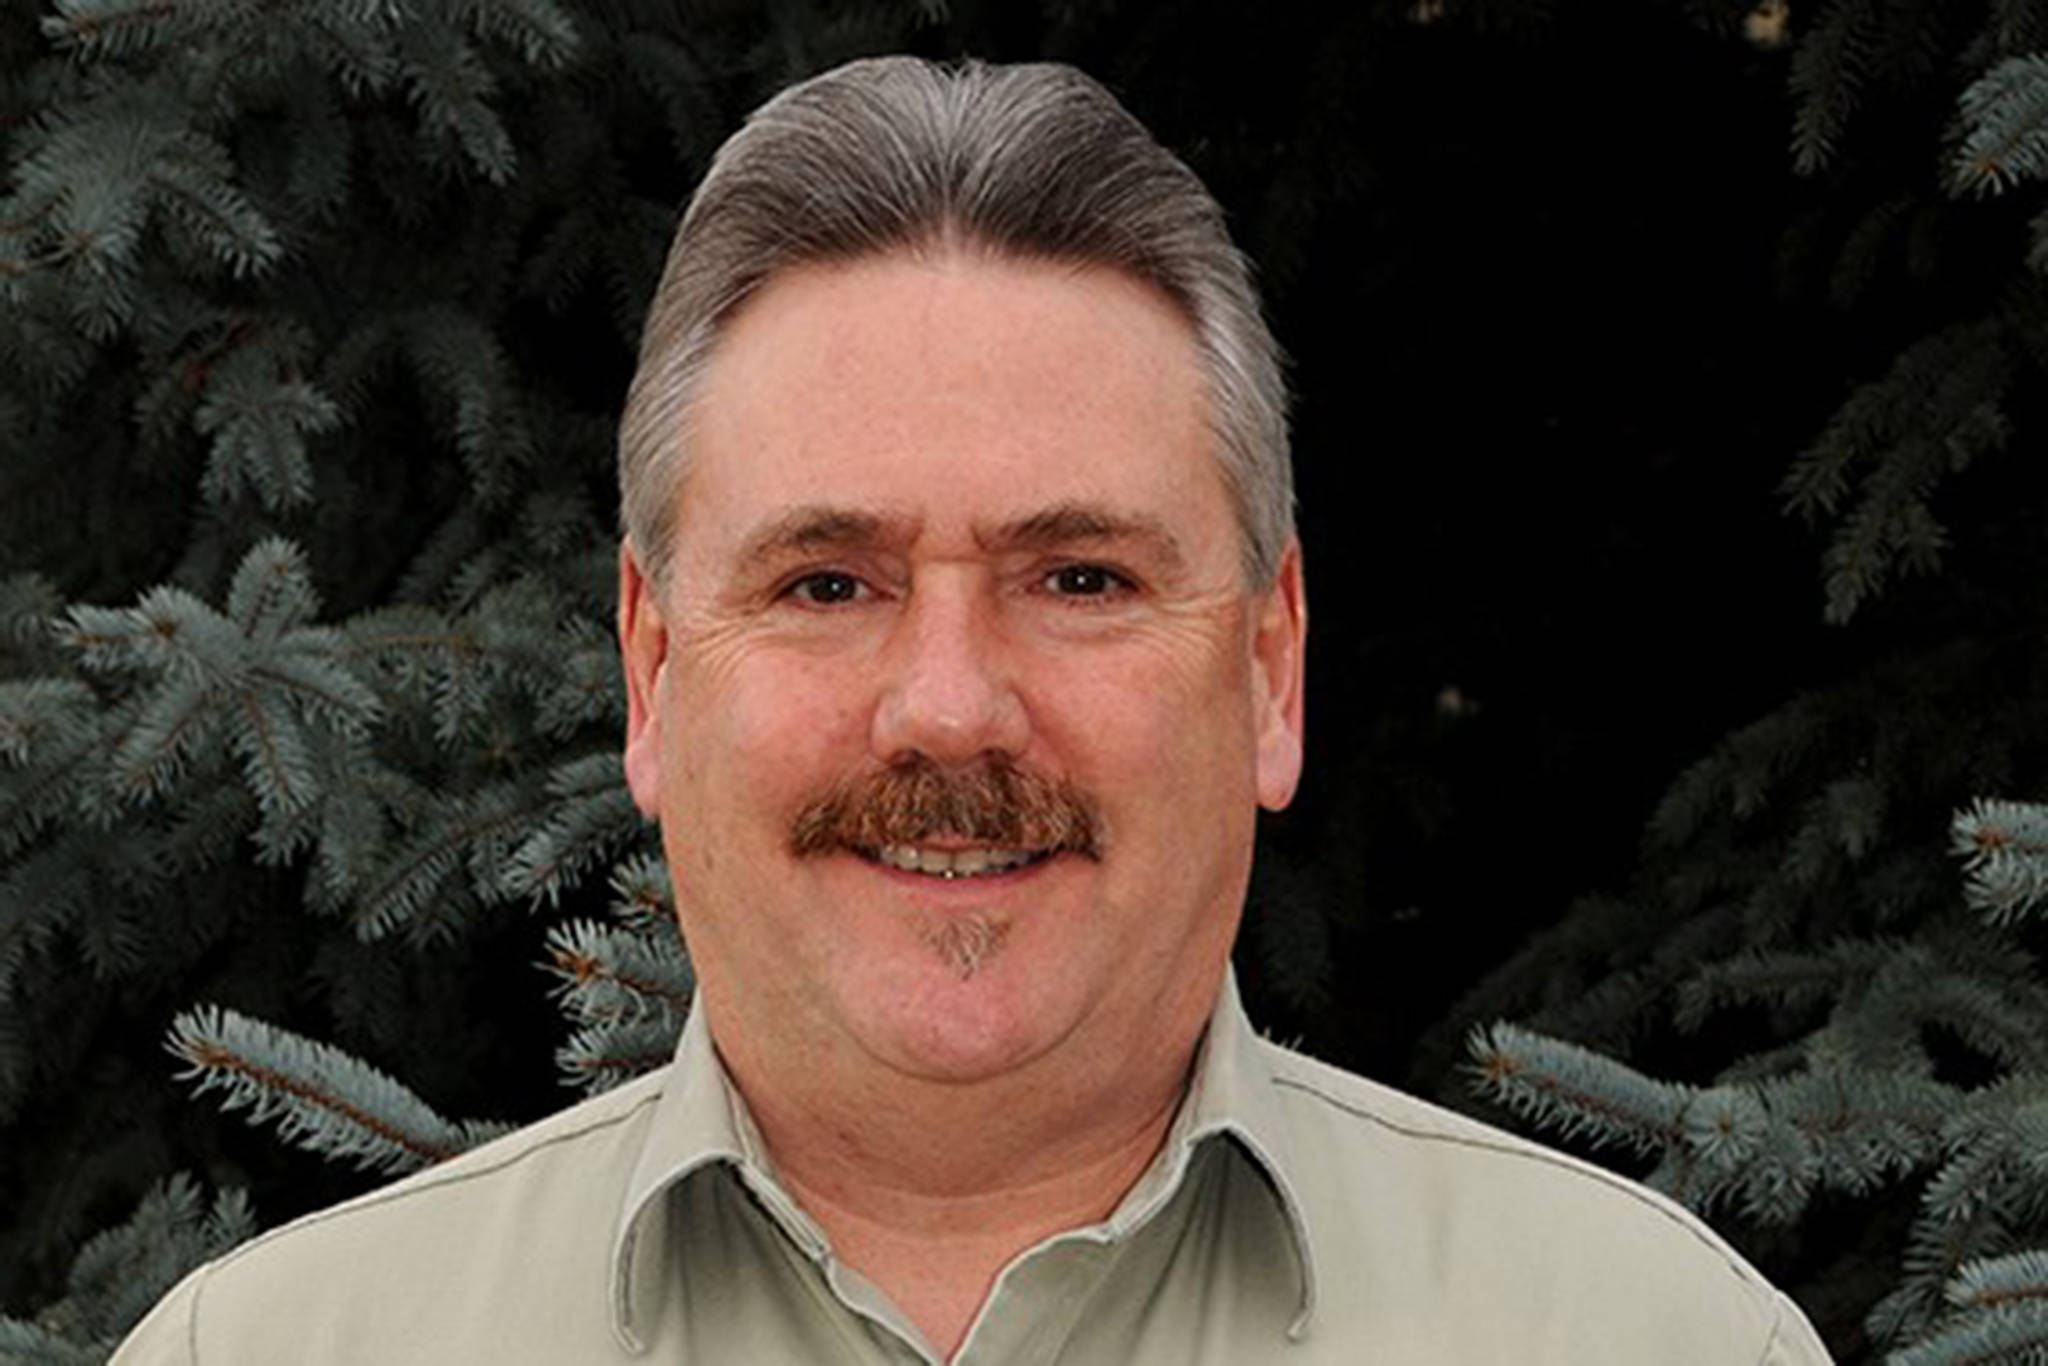 U.S. Forest Service Chief Vicki Christiansen announces David Schmid as the new Regional Forester for Alaska Region